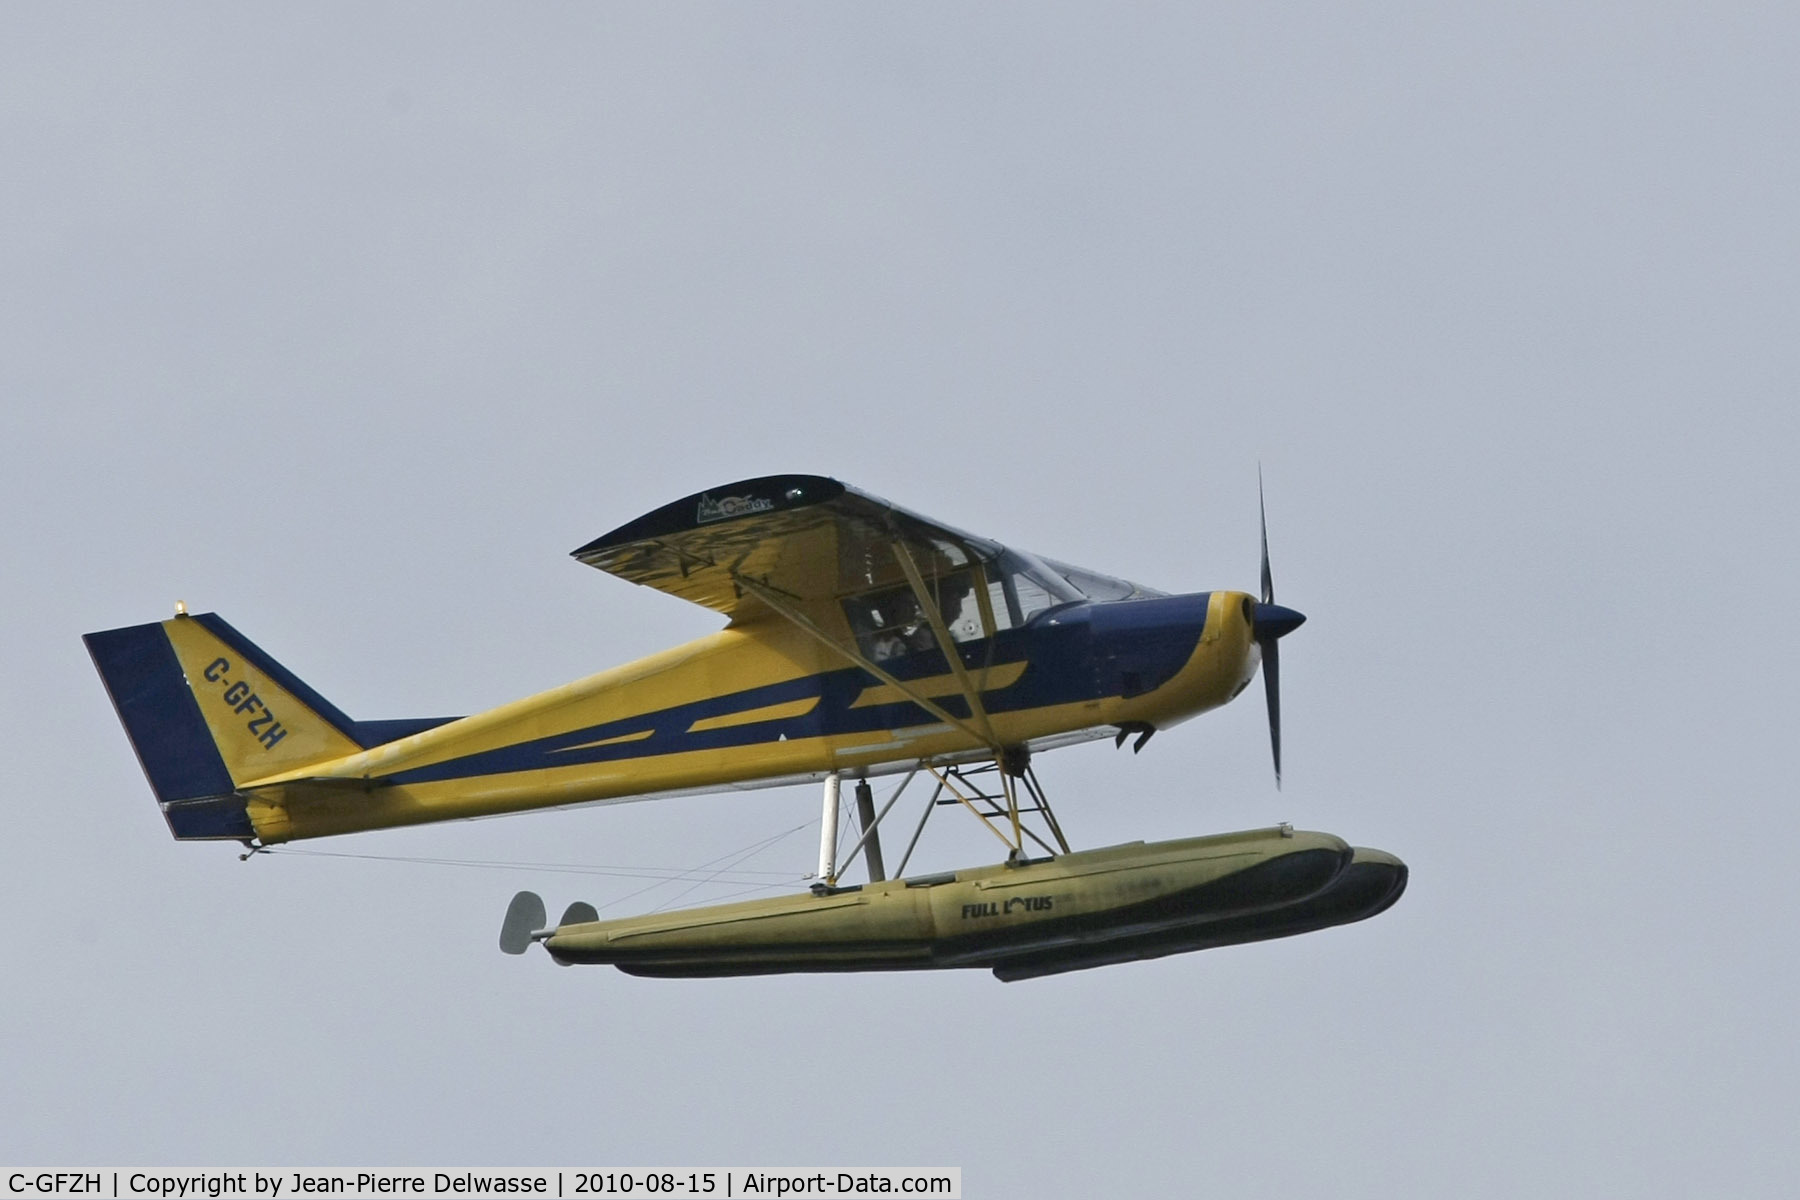 C-GFZH, 2000 Bushcaddy L-160 C/N CA002-053, In the sky of the Quarry island (Mingan archipelago - Québec)